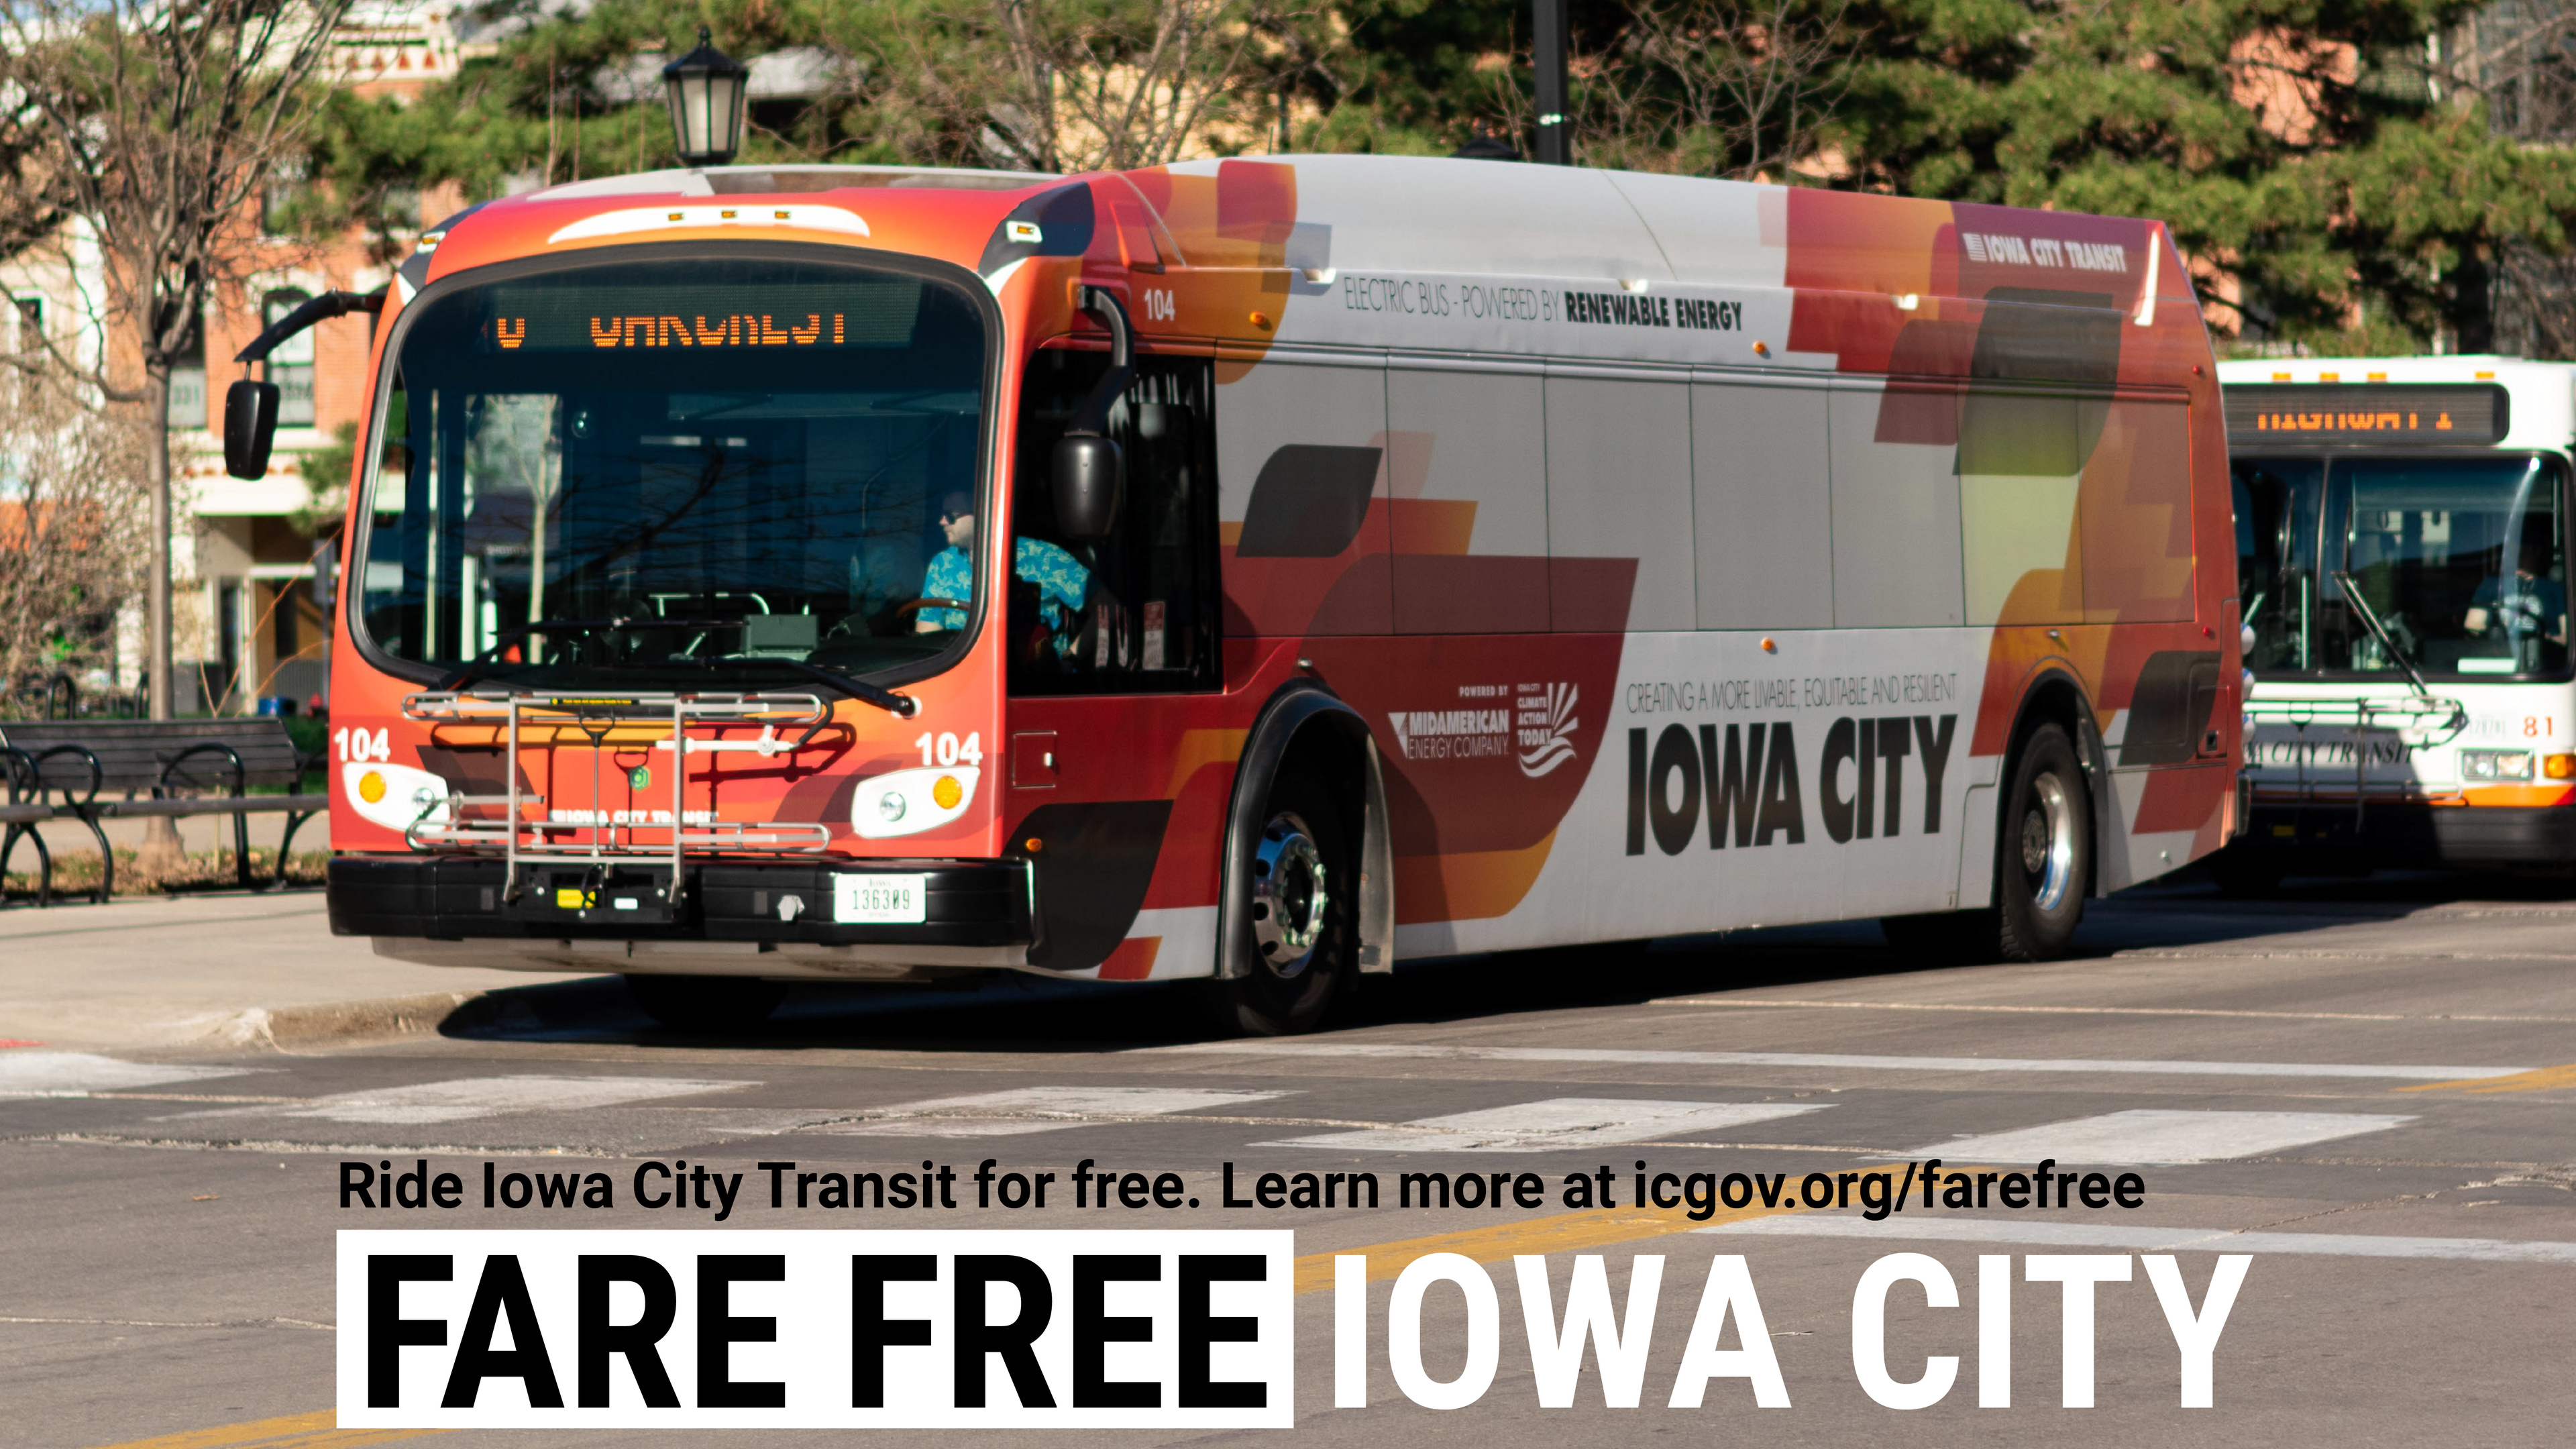 Iowa City Transit is fare free